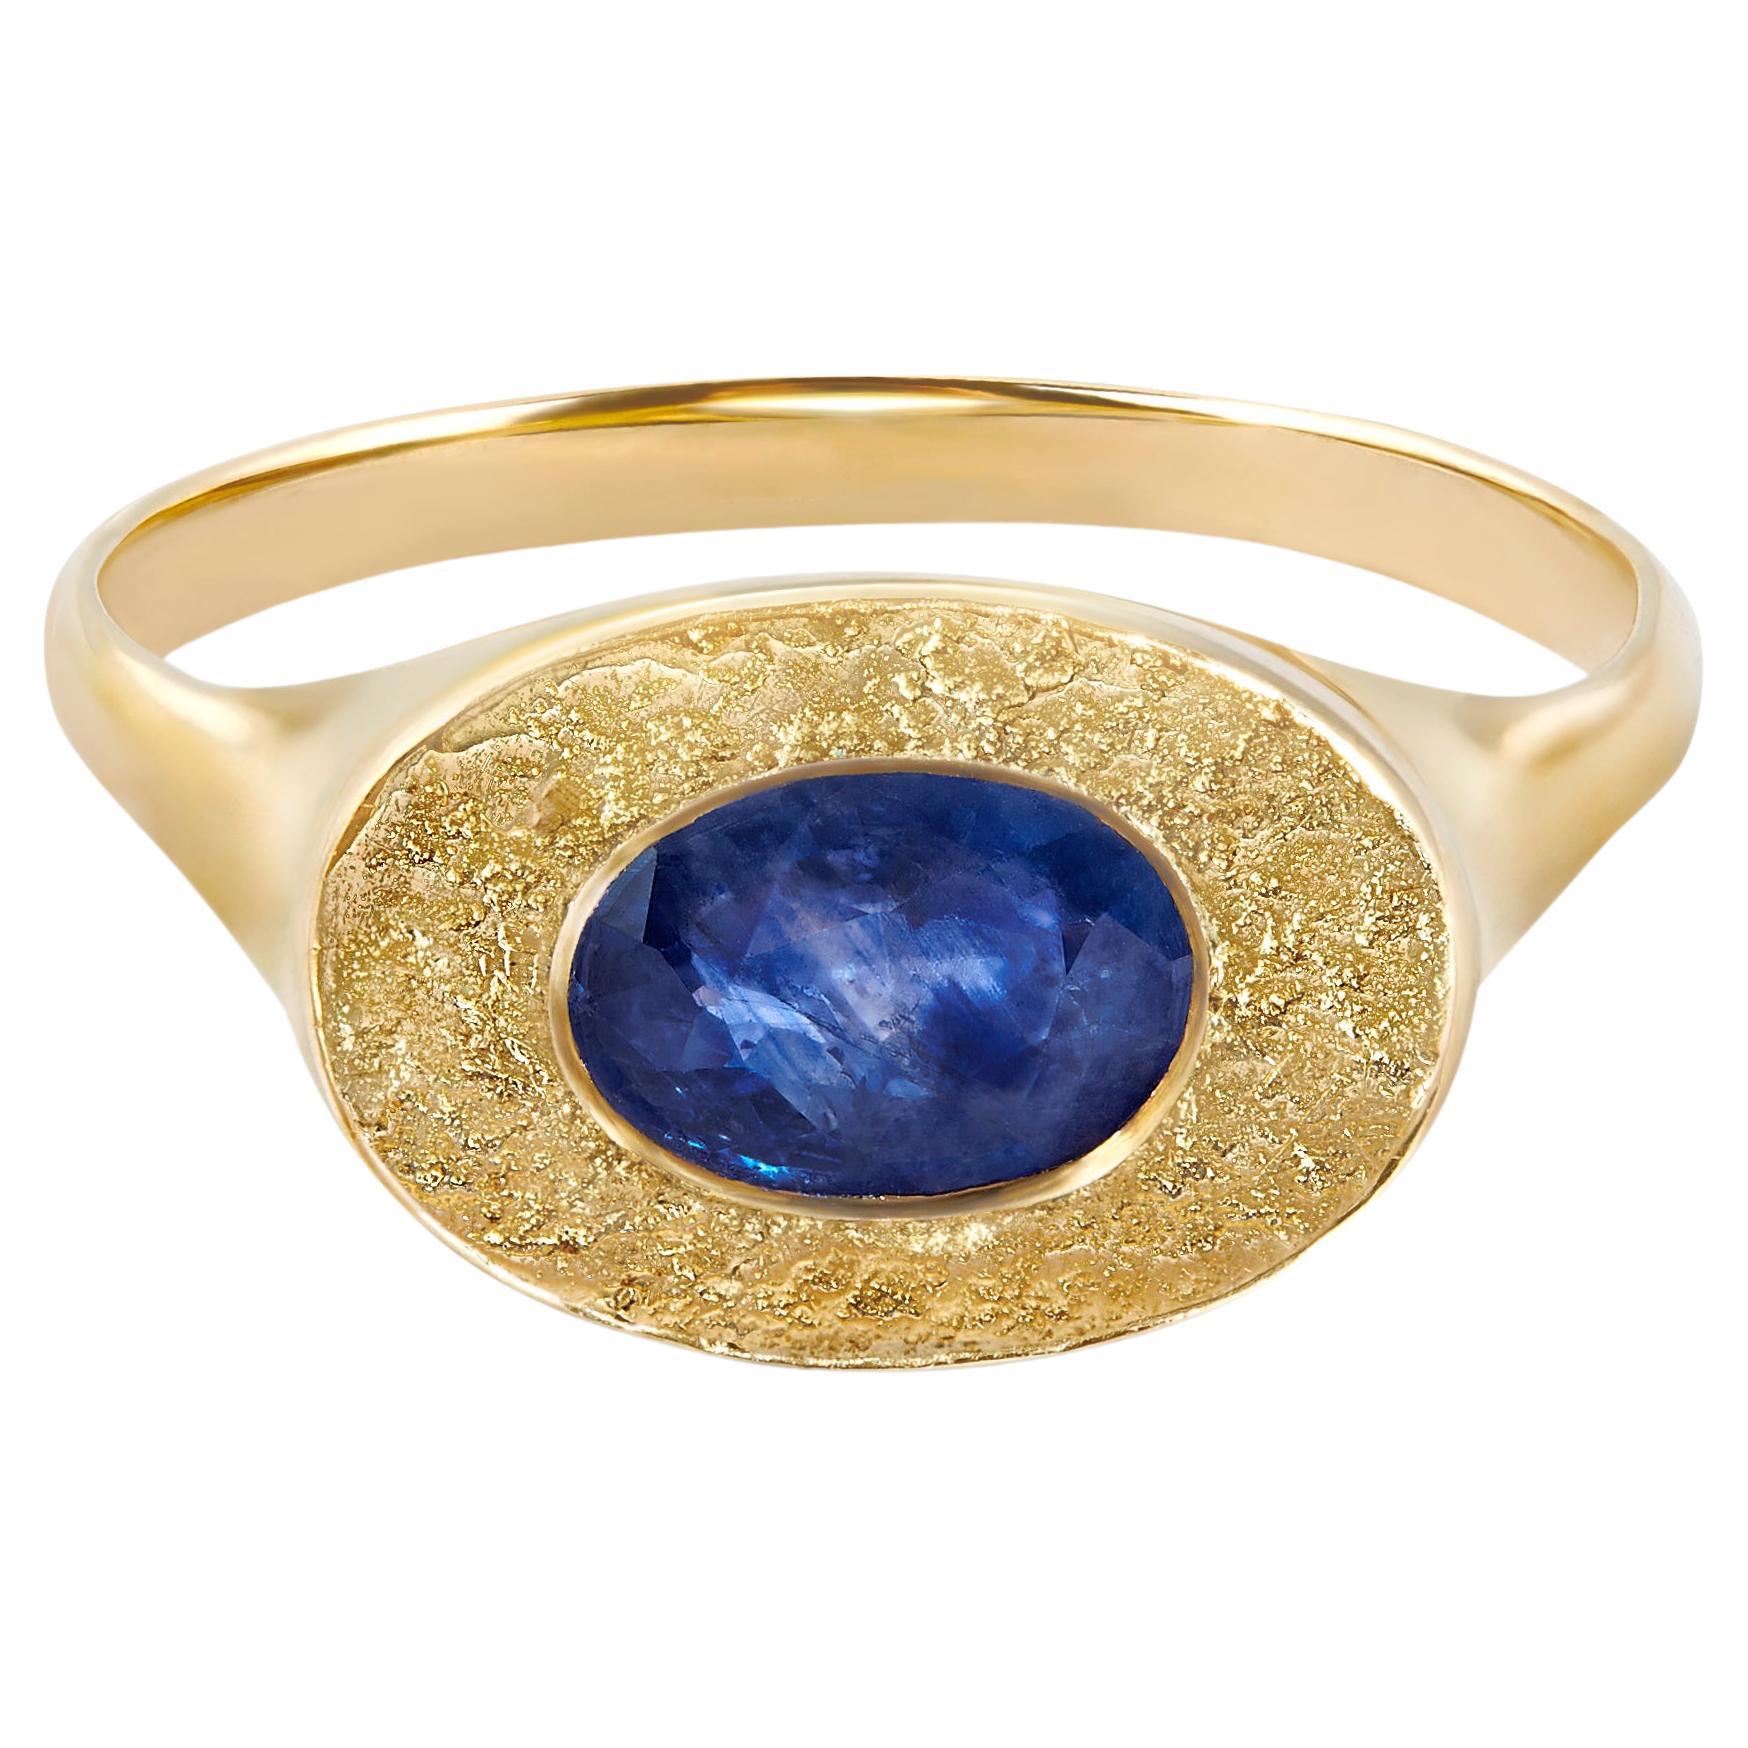 Oval Sapphire Signet Ring in 14 Karat Gold by Allison Bryan